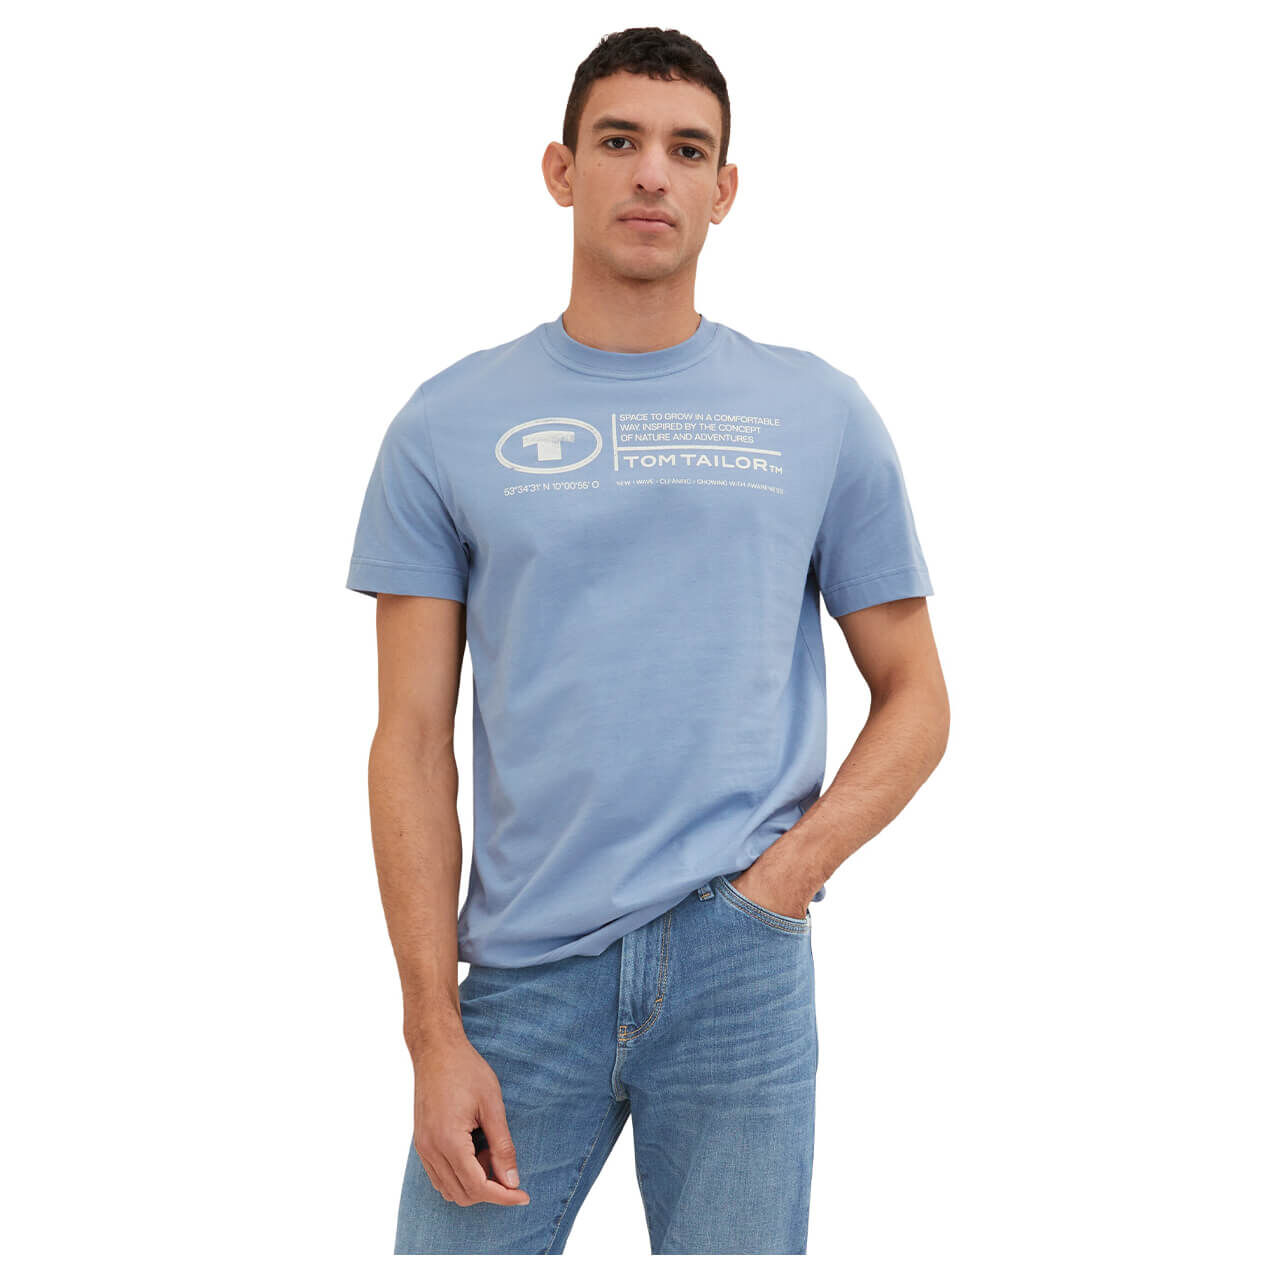 Tom Tailor Herren T-Shirt greyish mid blue logo wording